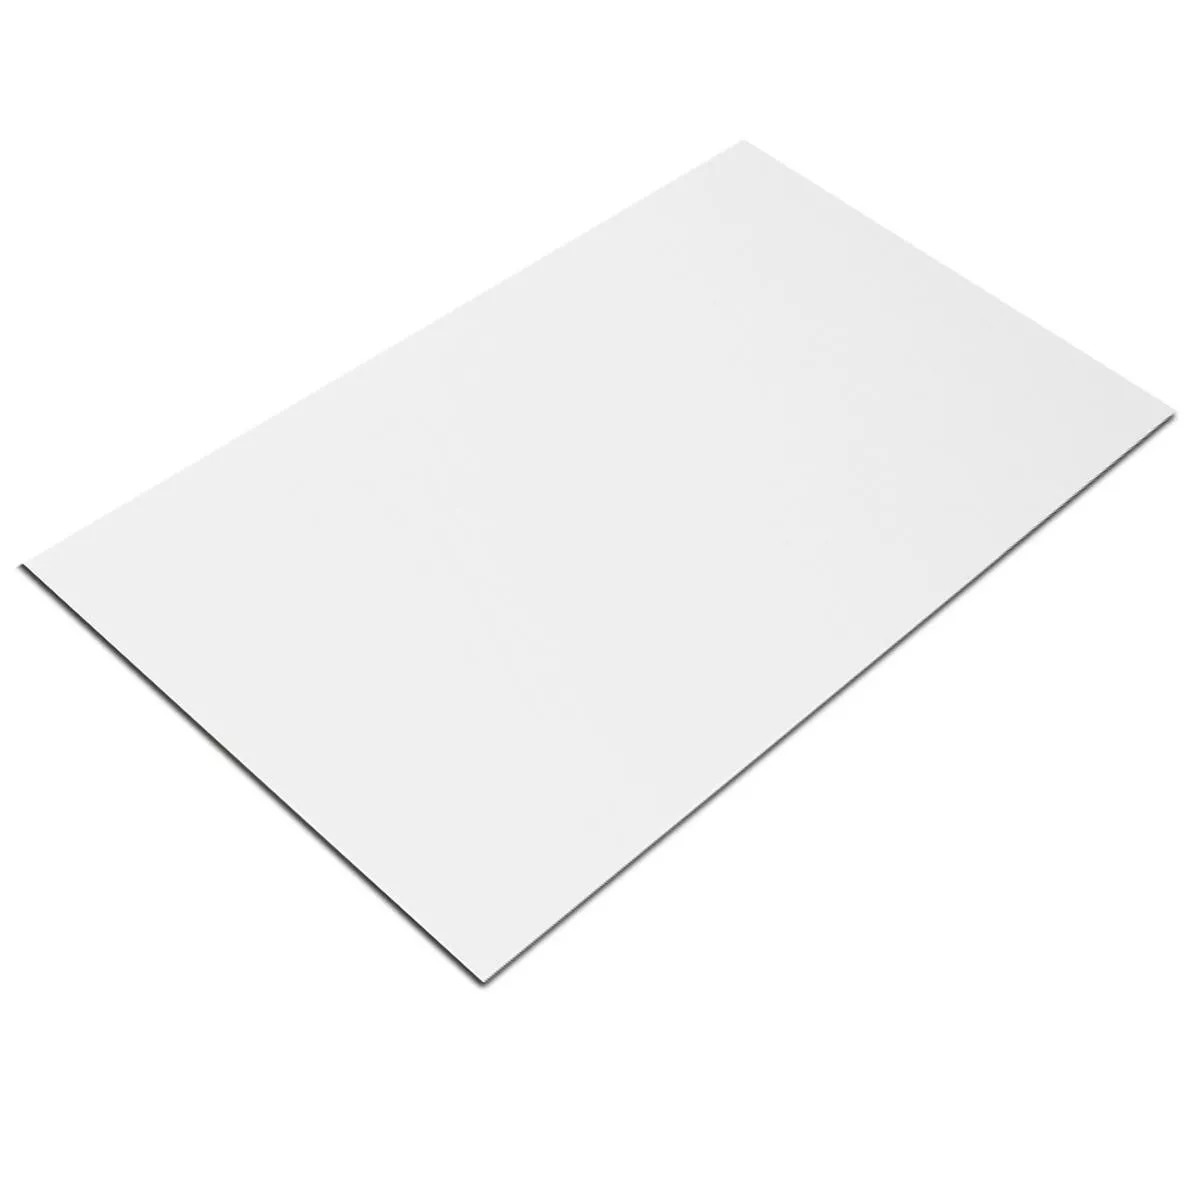 Sample Wall Tiles Fenway White Mat 20x25cm